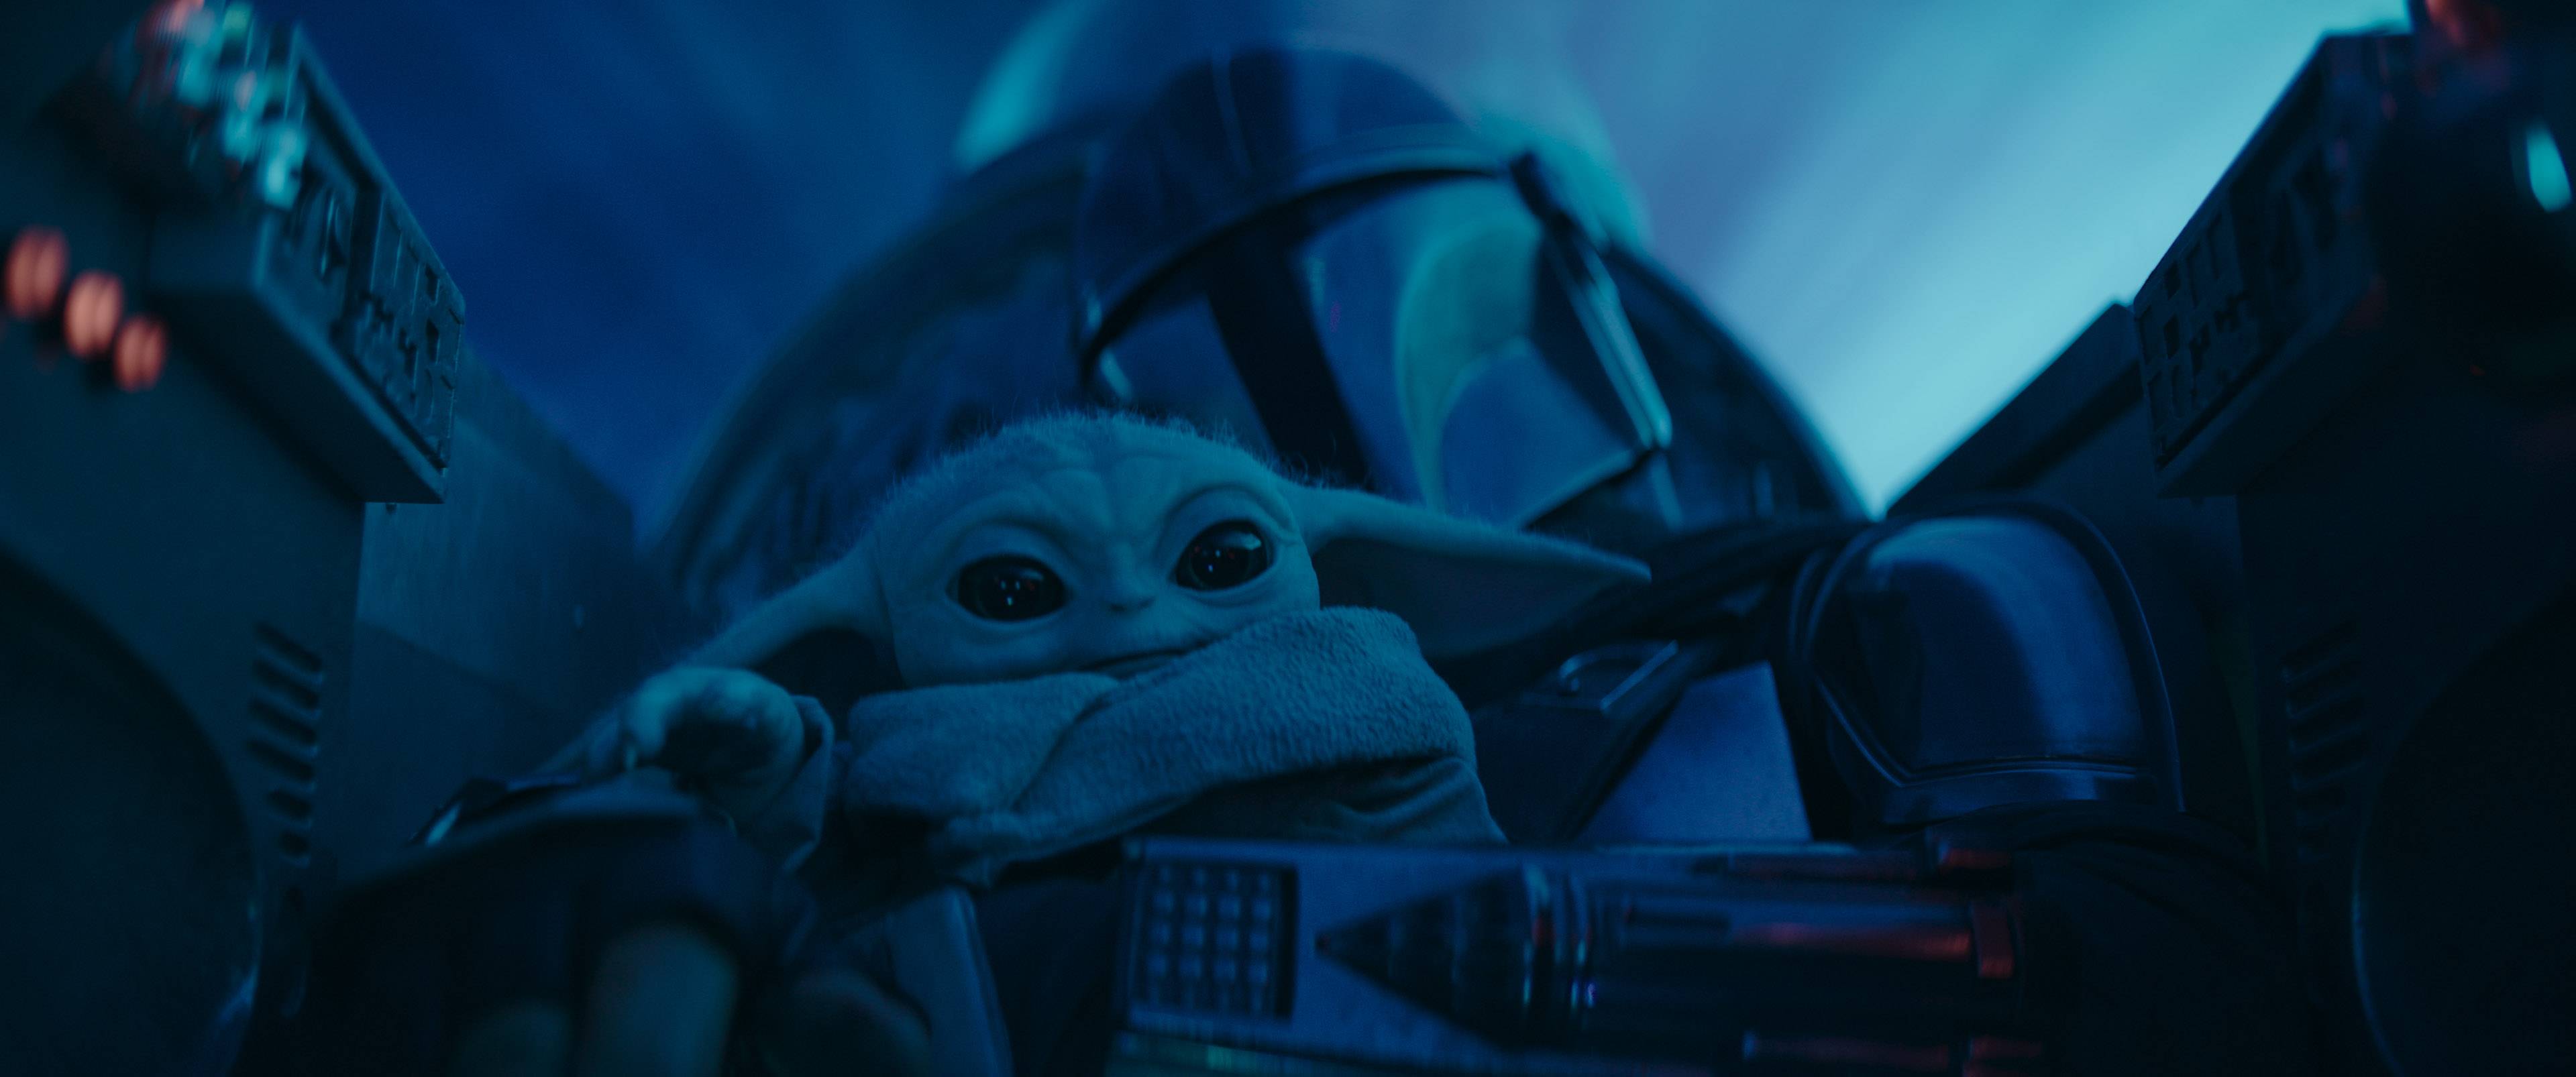 Disney+ debuts trailer for the upcoming season 3 of Star Wars: The Mandalorian